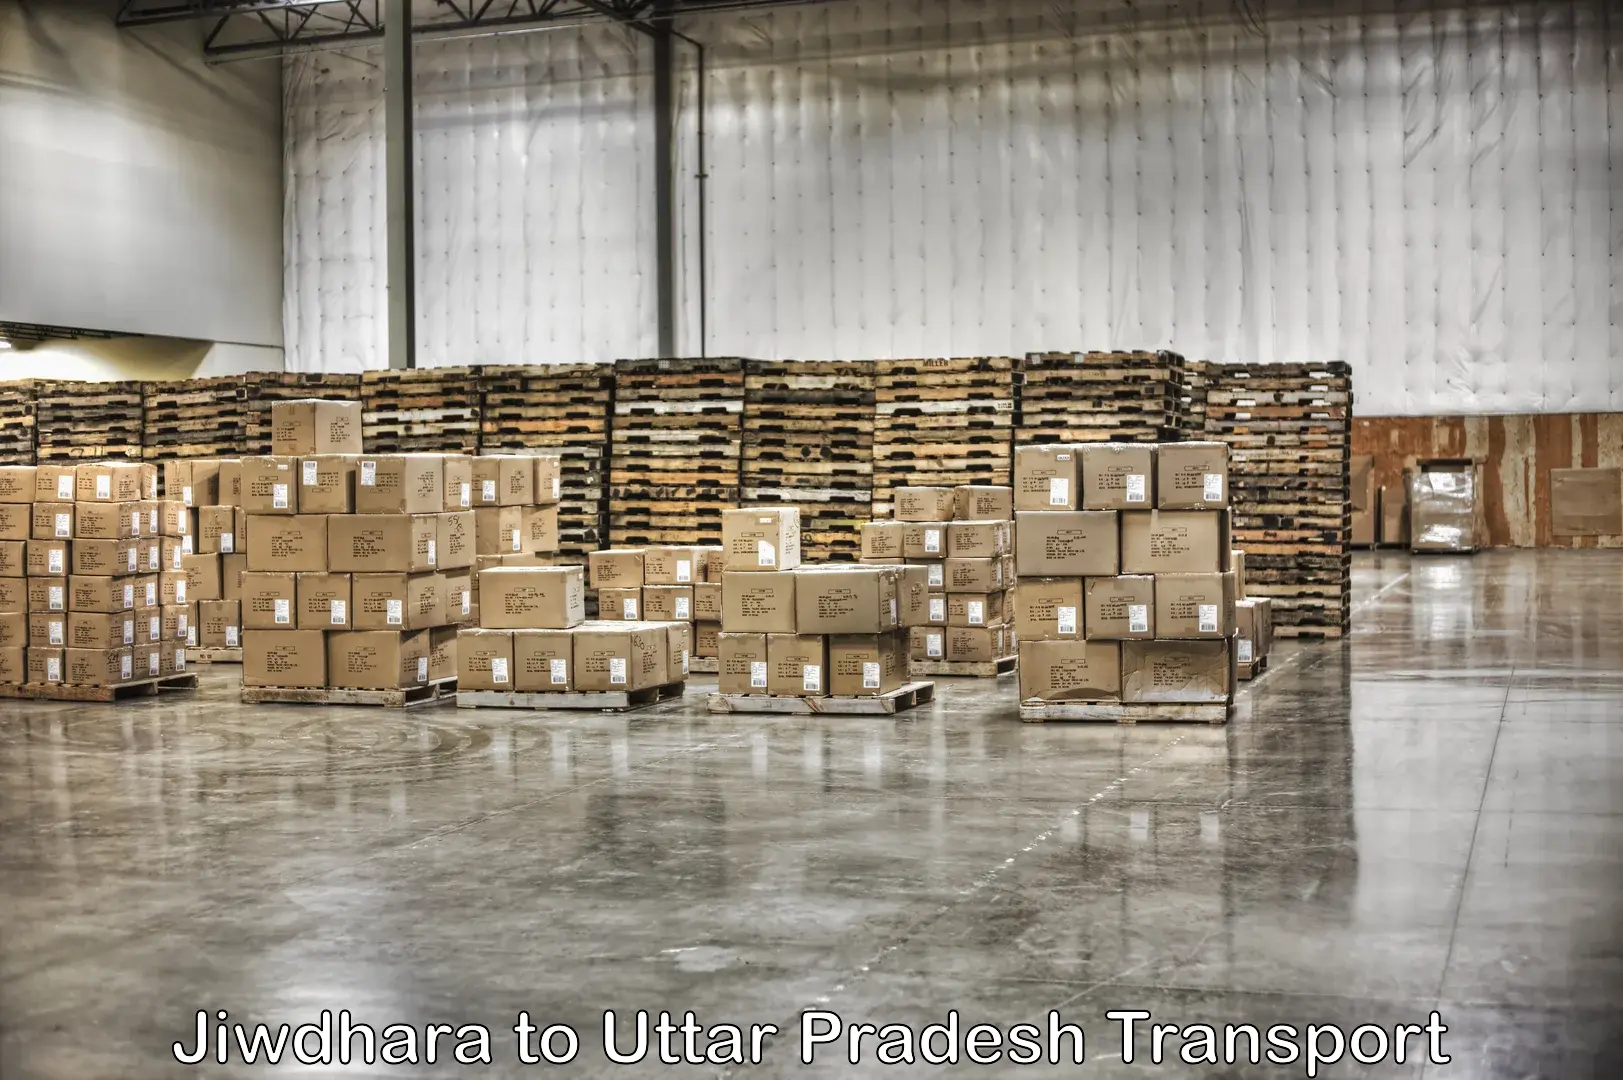 Truck transport companies in India Jiwdhara to Uttar Pradesh